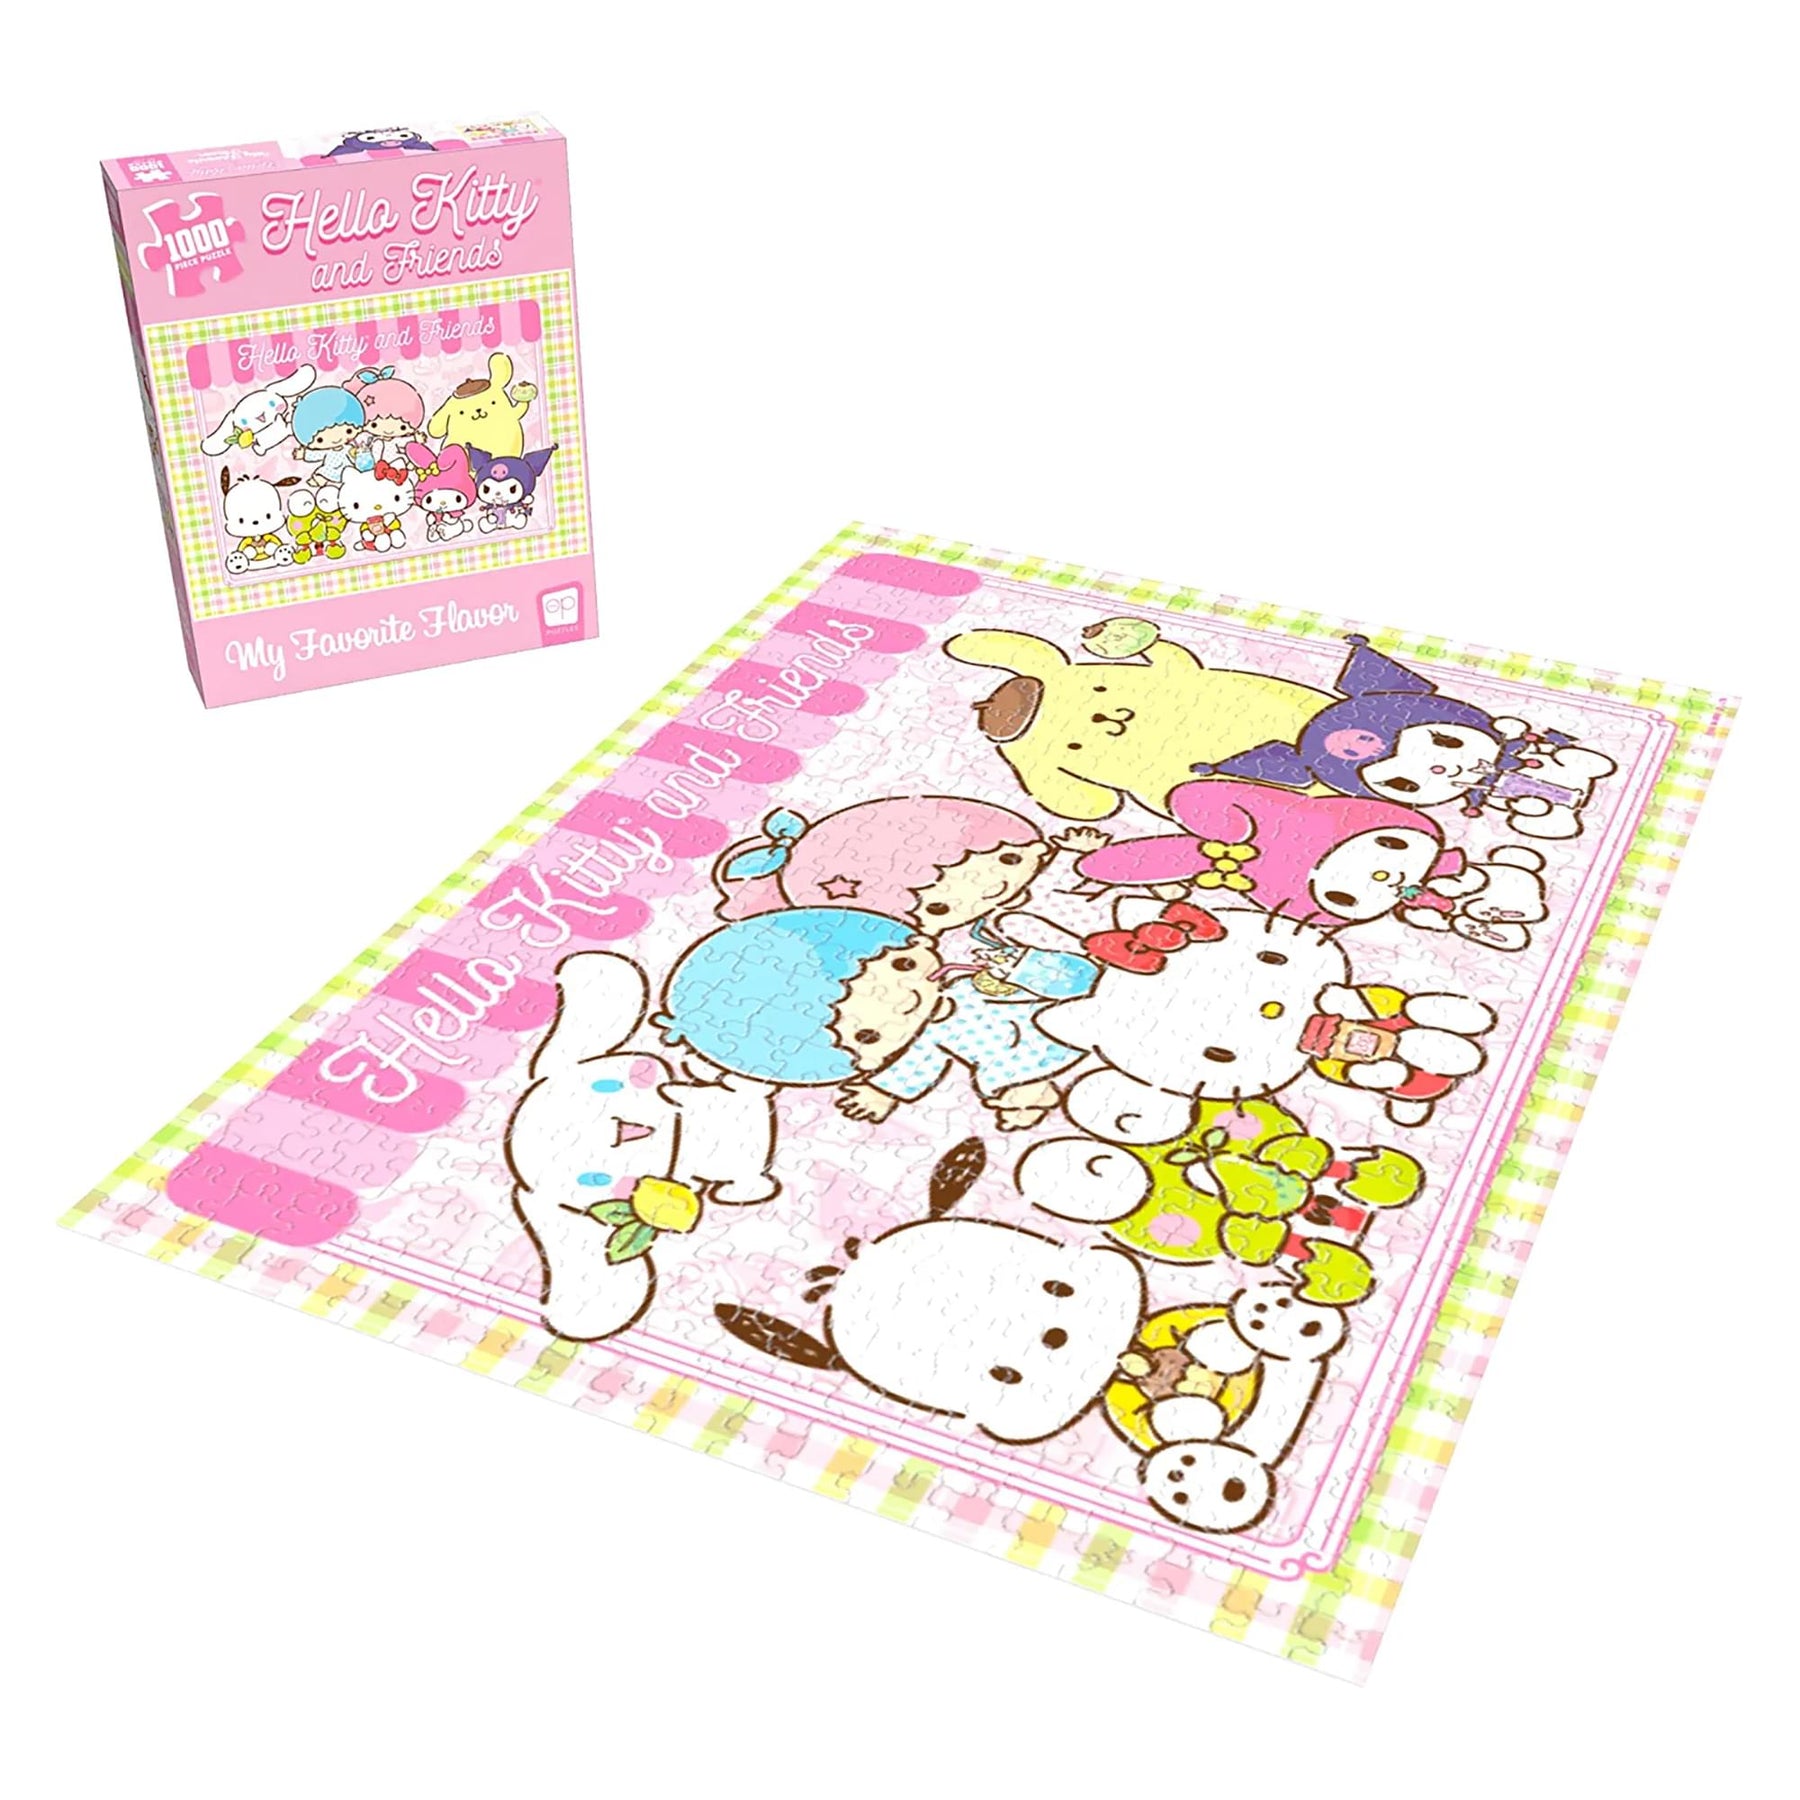 Hello Kitty & Friends 1000 Piece Jigsaw Puzzle